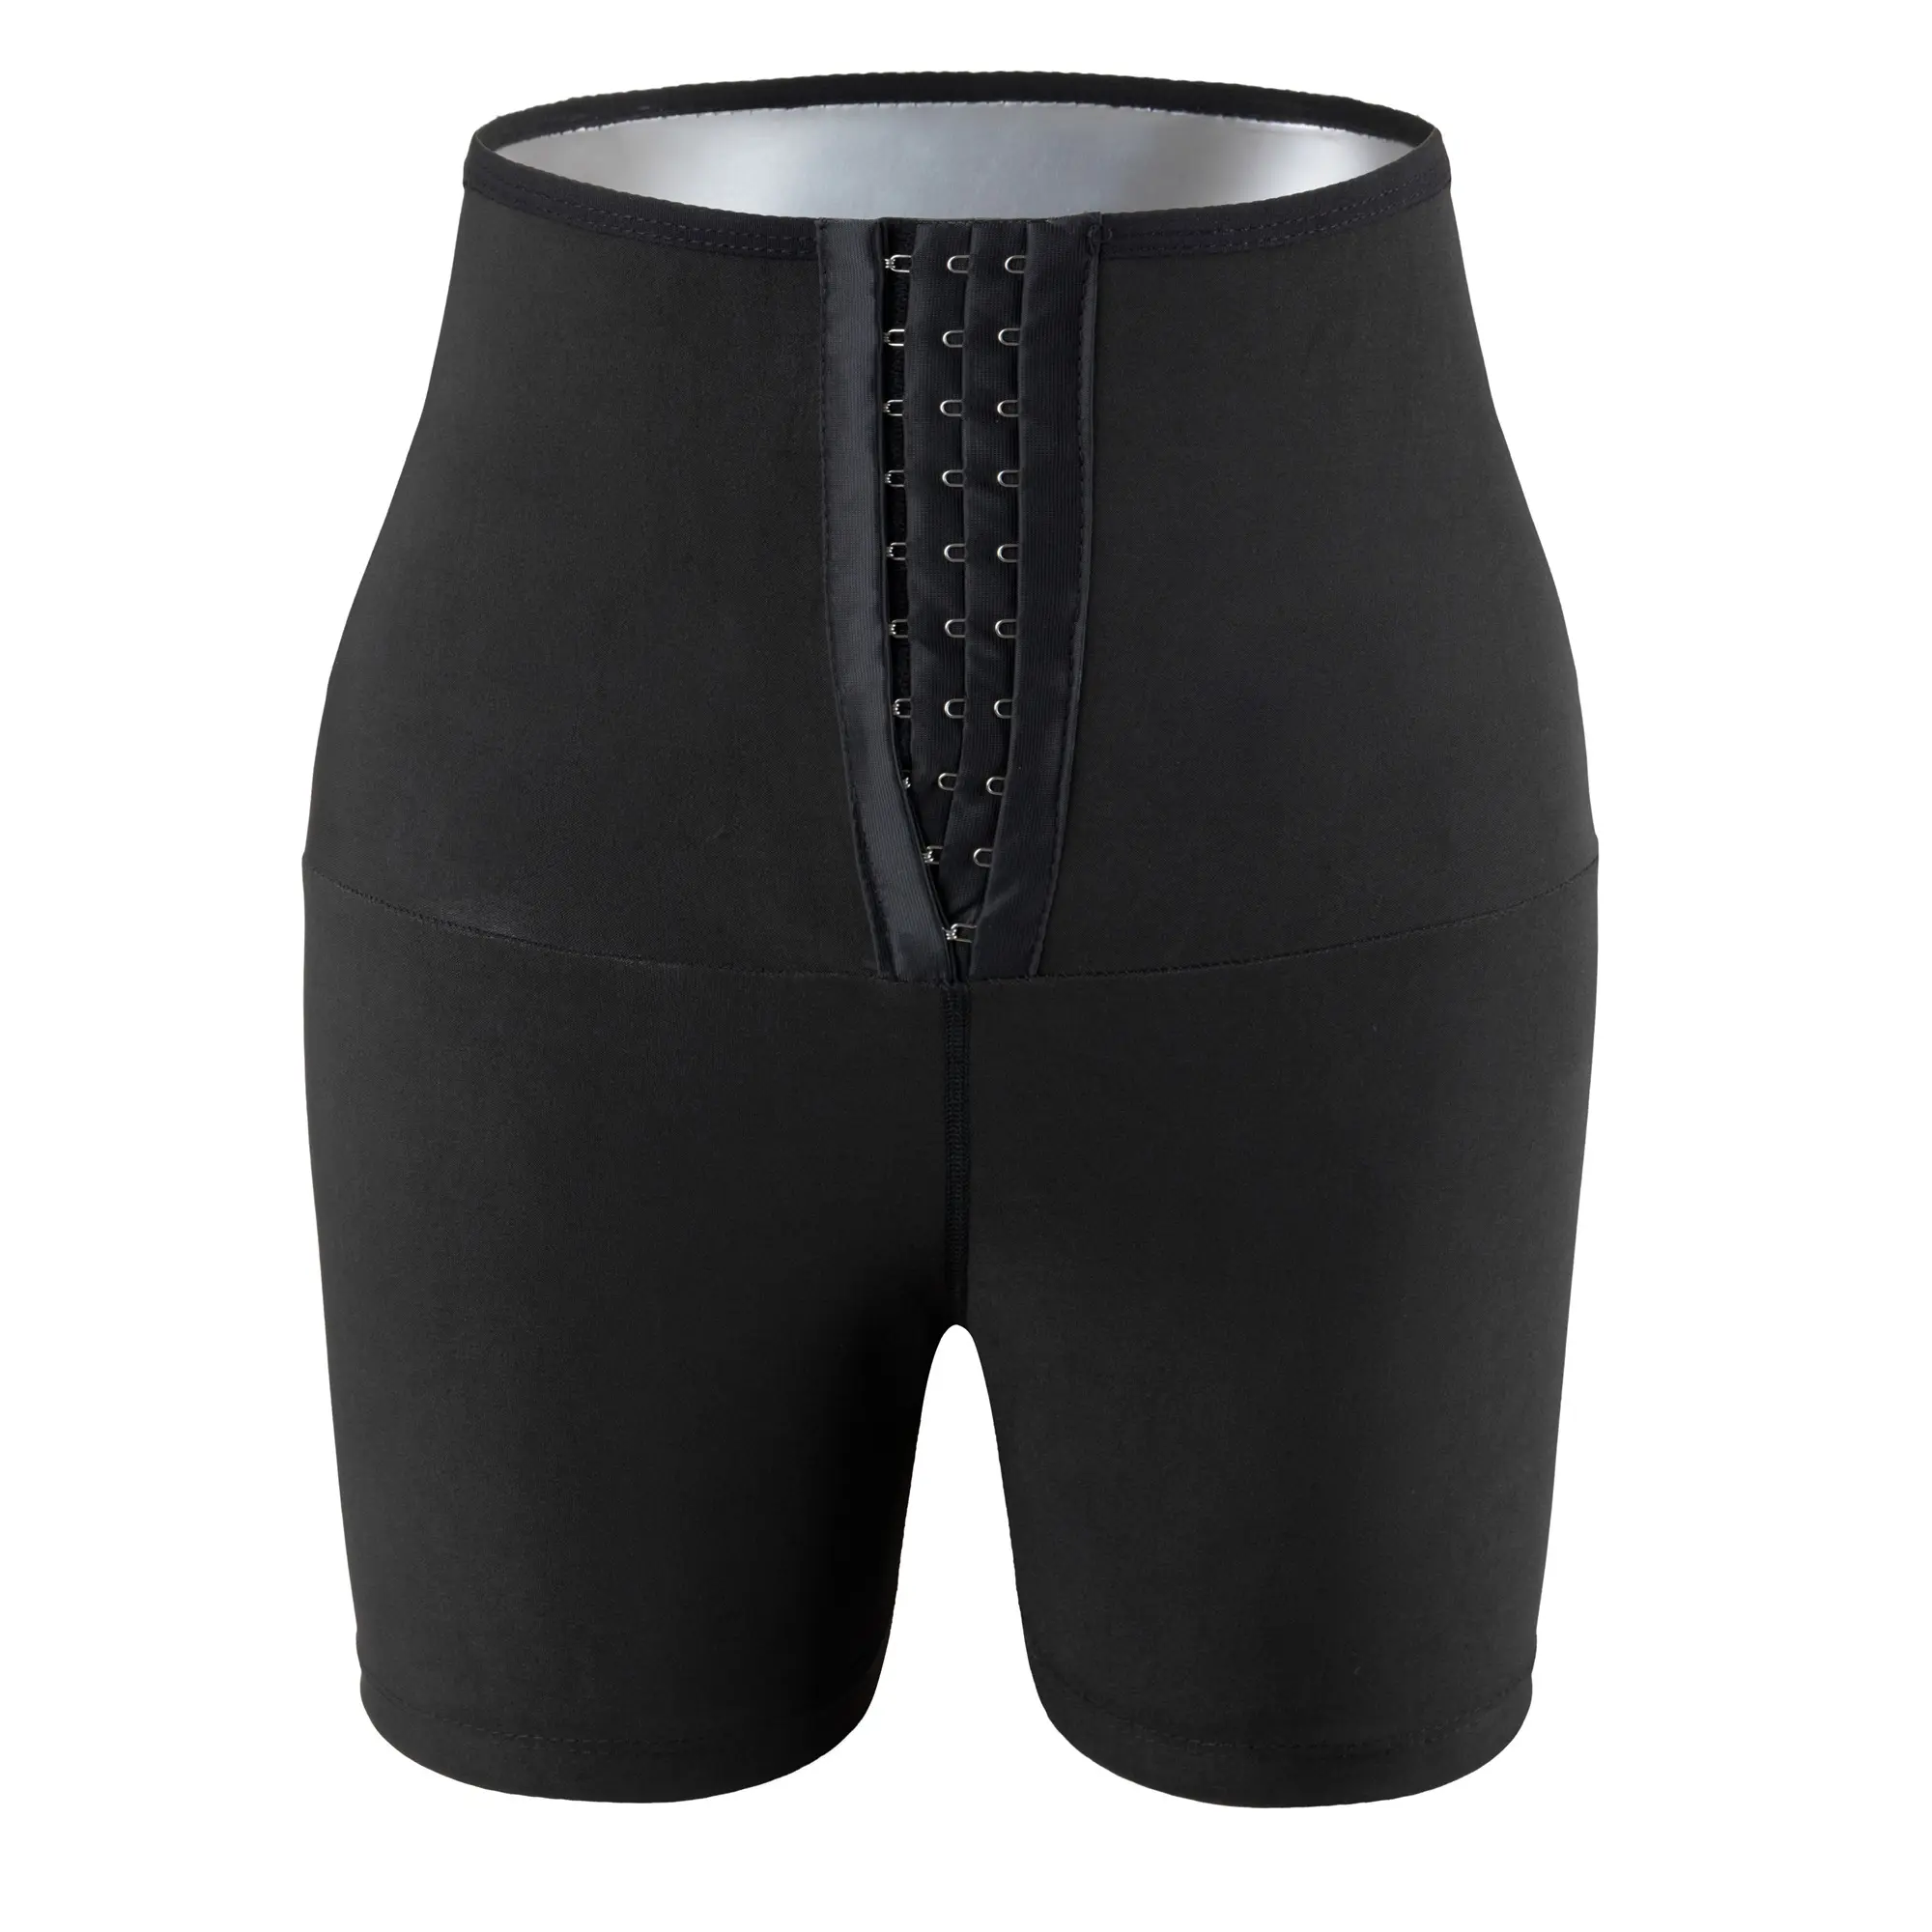 Hot Waist Trainer Corset High Waist Yoga Pants Gym Leggings With Waist Cincher Sauna Effect Body Shaper Slimming Pants